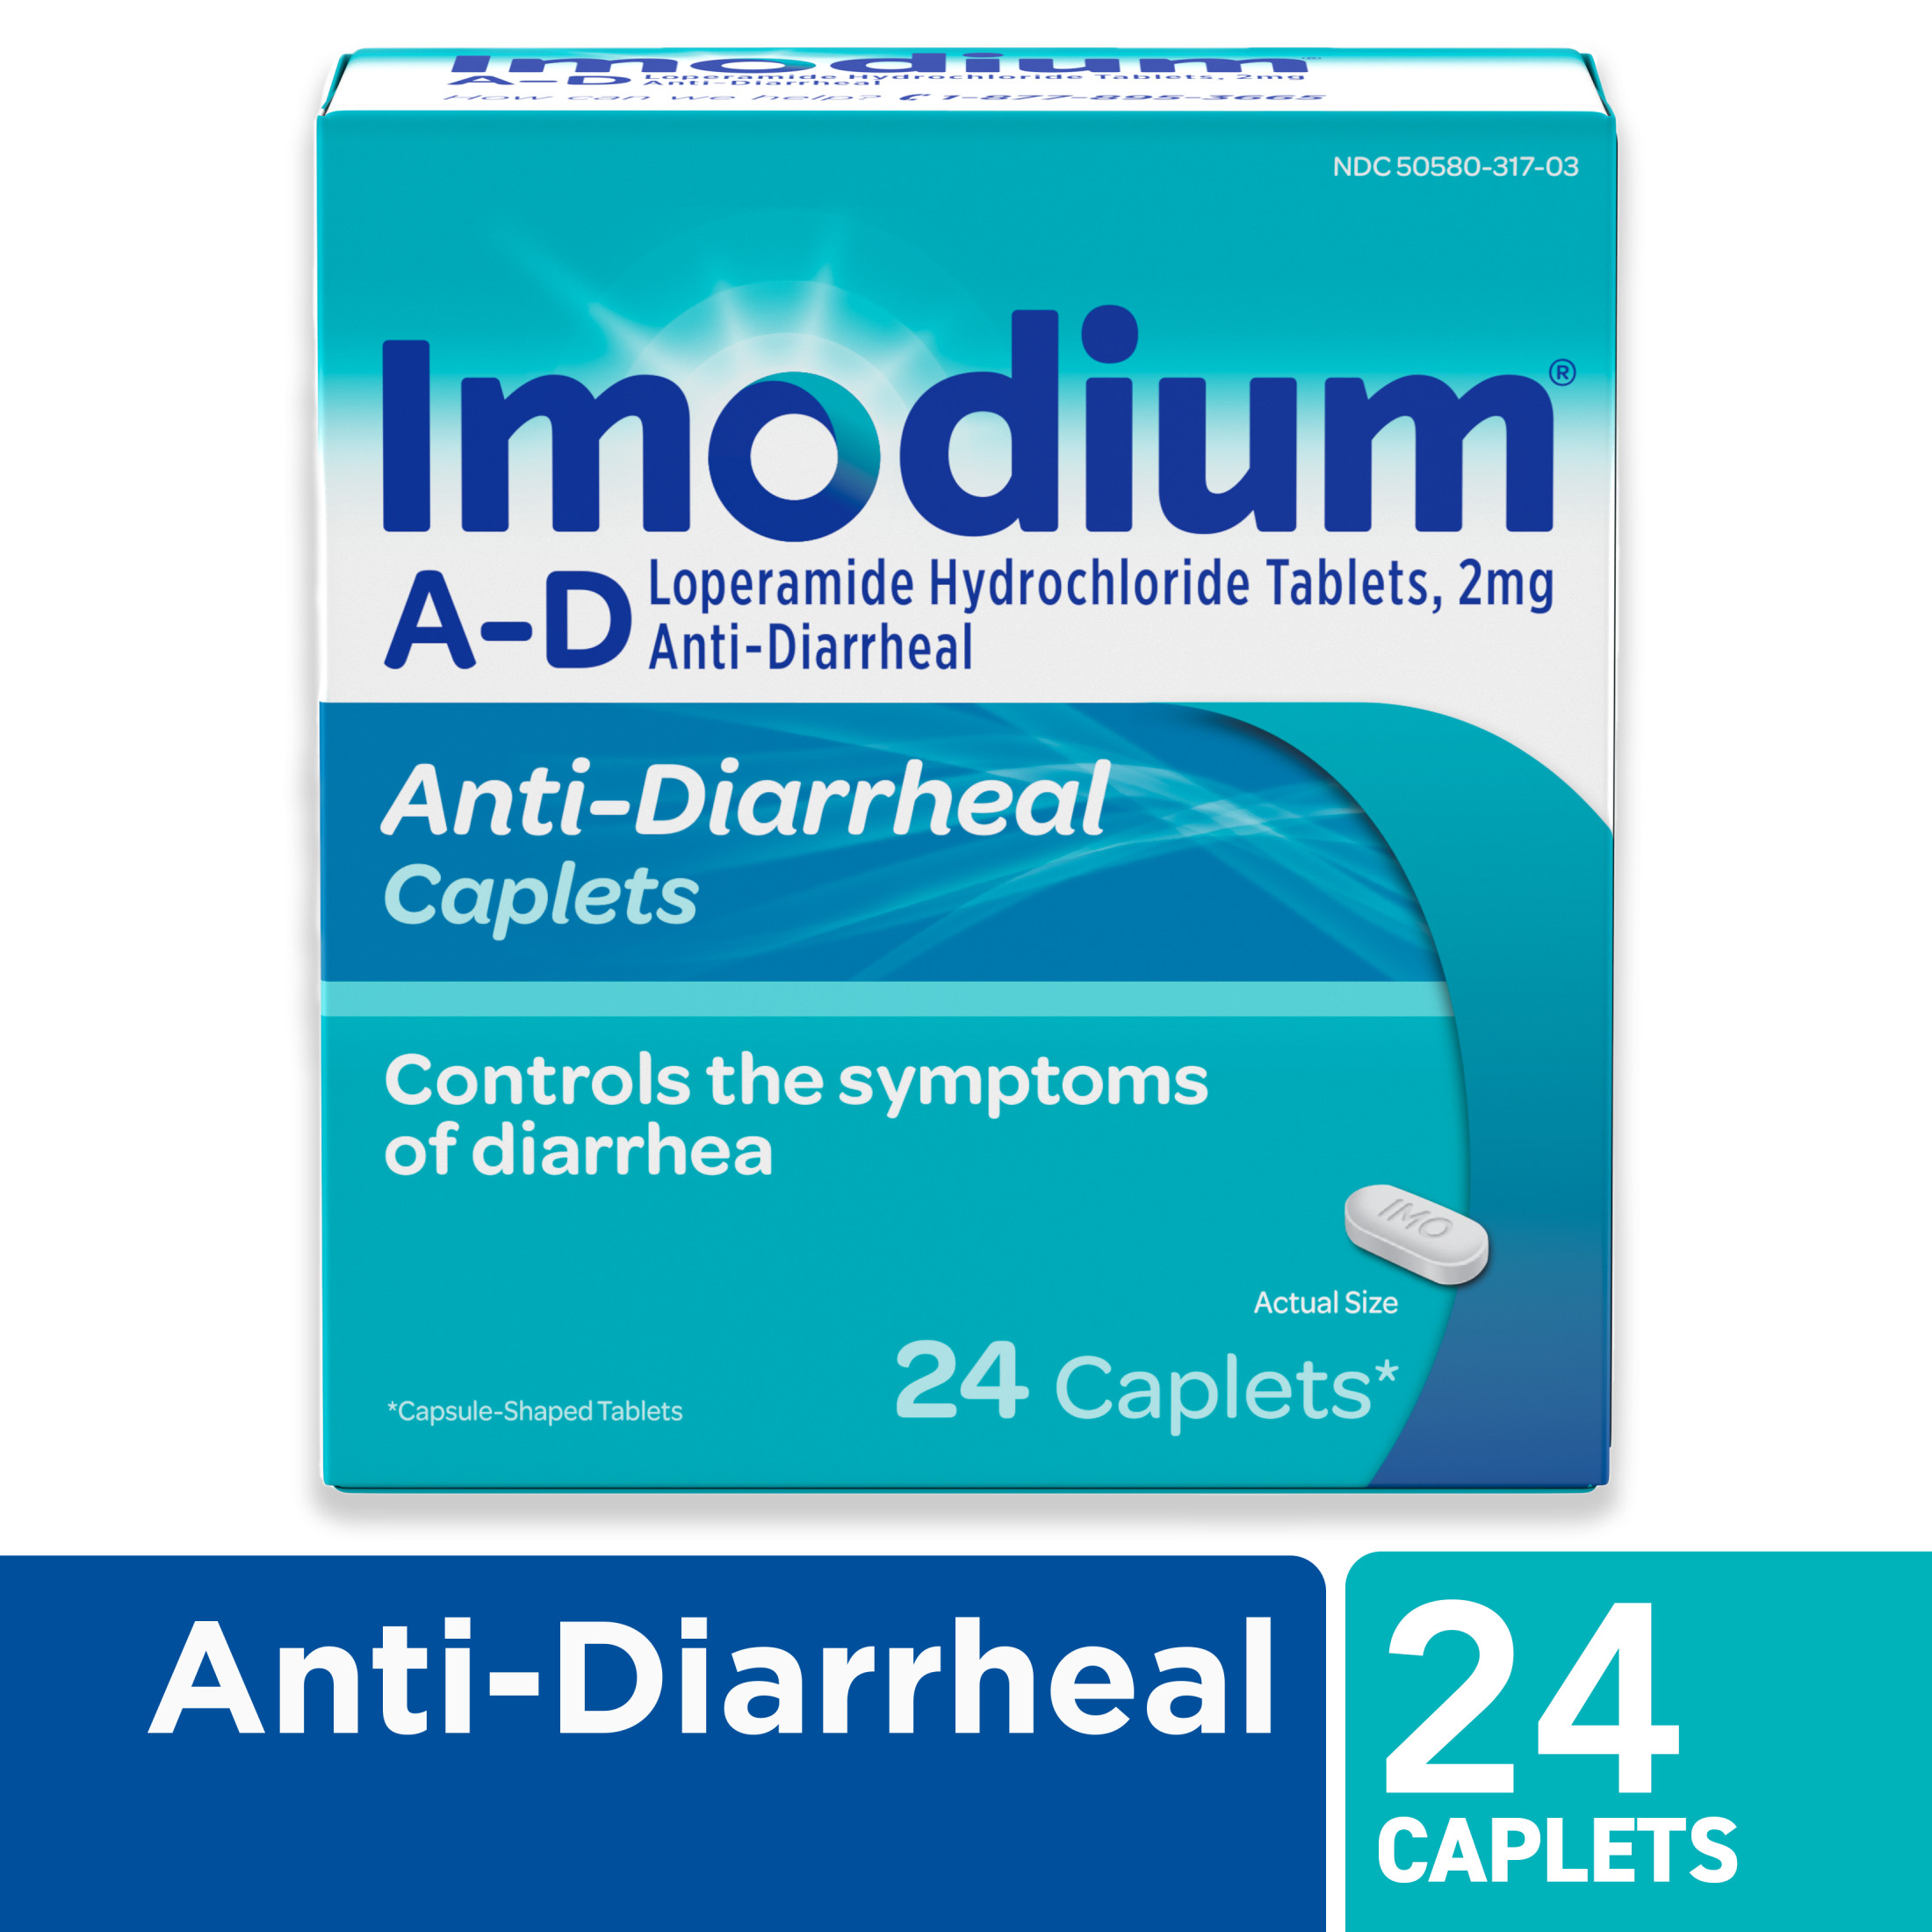 Imodium A-D Diarrhea Relief Caplets, Loperamide Hydrochloride, 24 Ct. - image 1 of 9